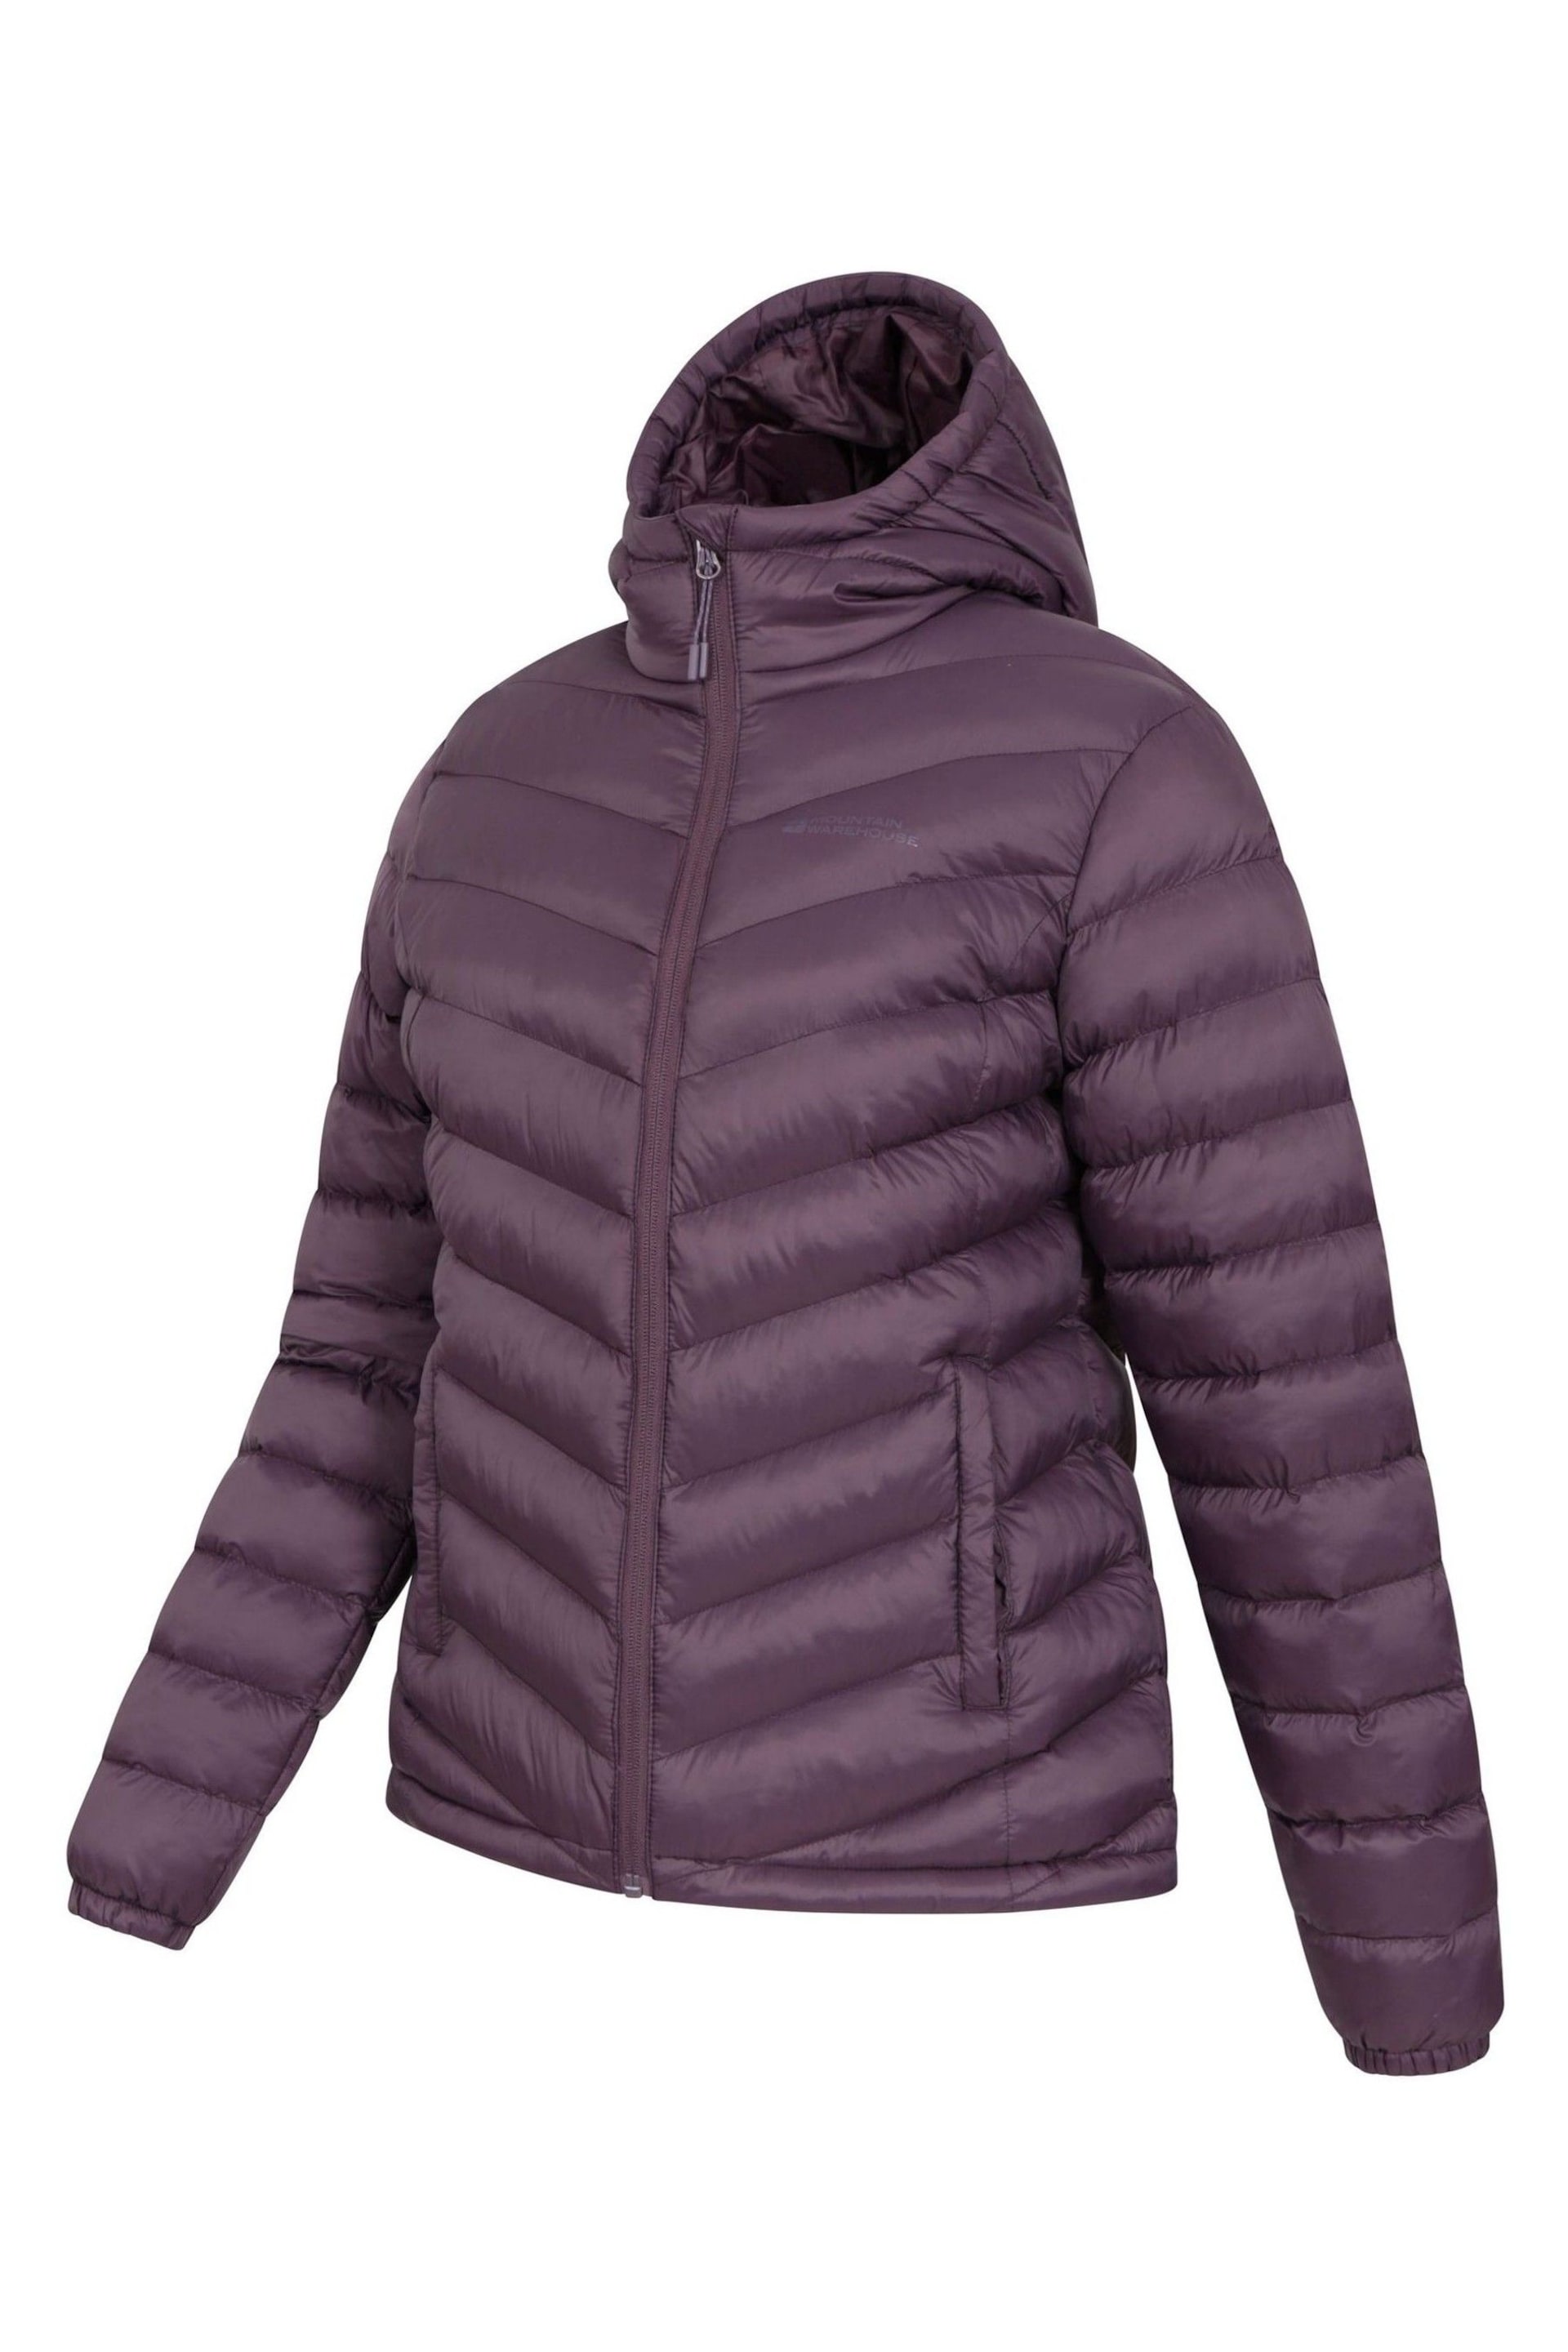 Mountain Warehouse Purple Womens Seasons Water Resistant Padded Jacket - Image 6 of 6